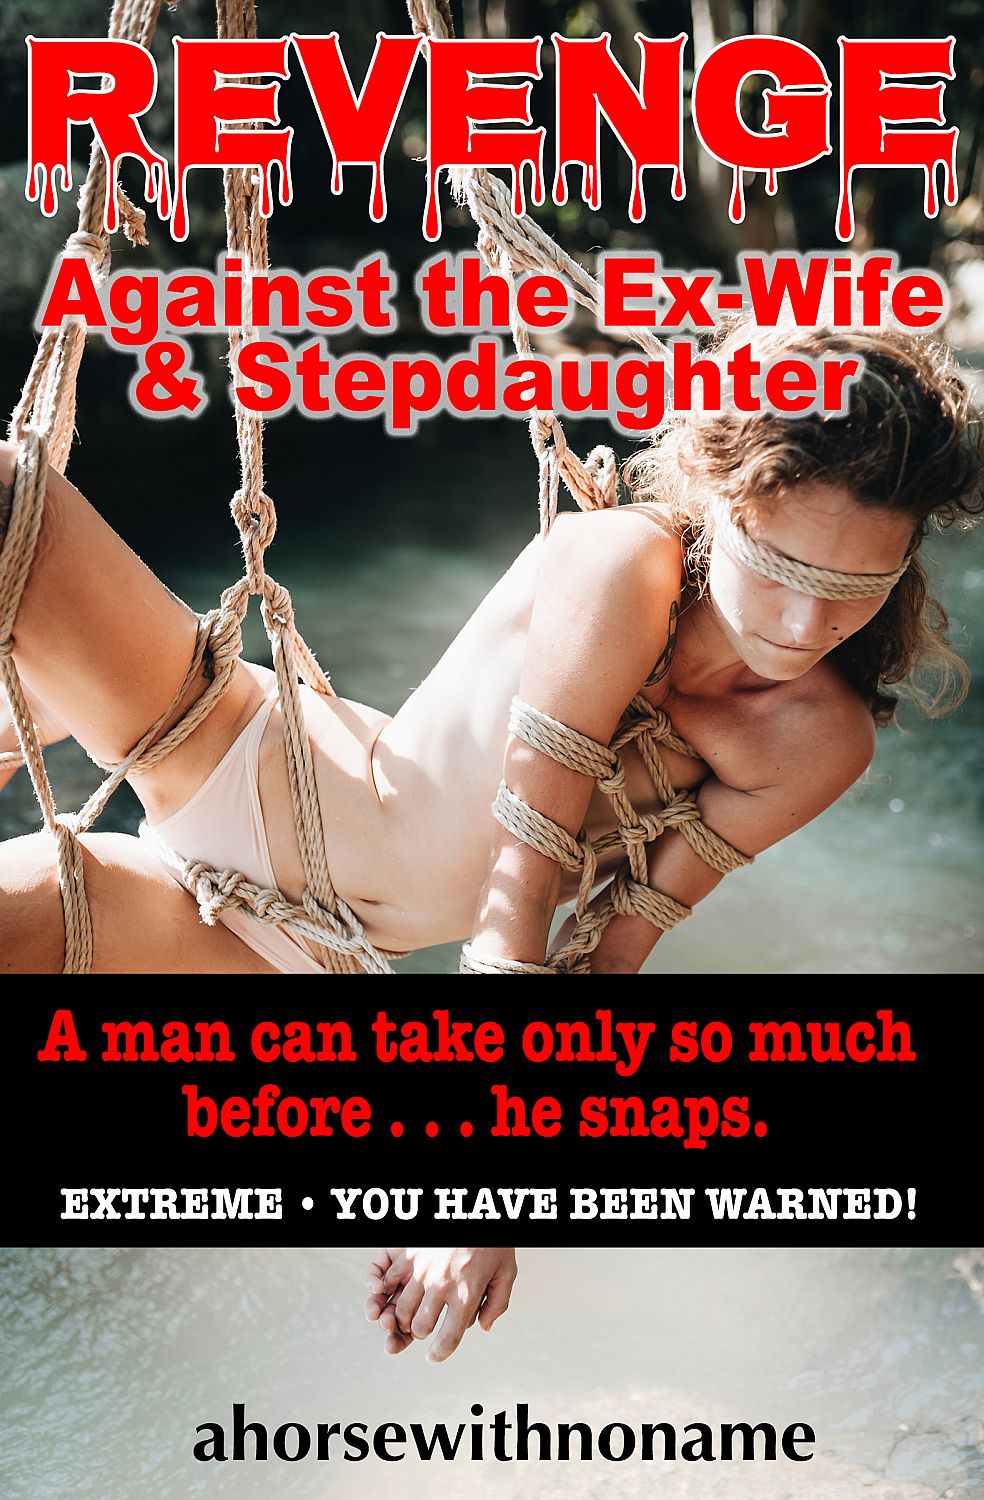 Revenge Against the Ex-wife & Stepdaughter - Cover